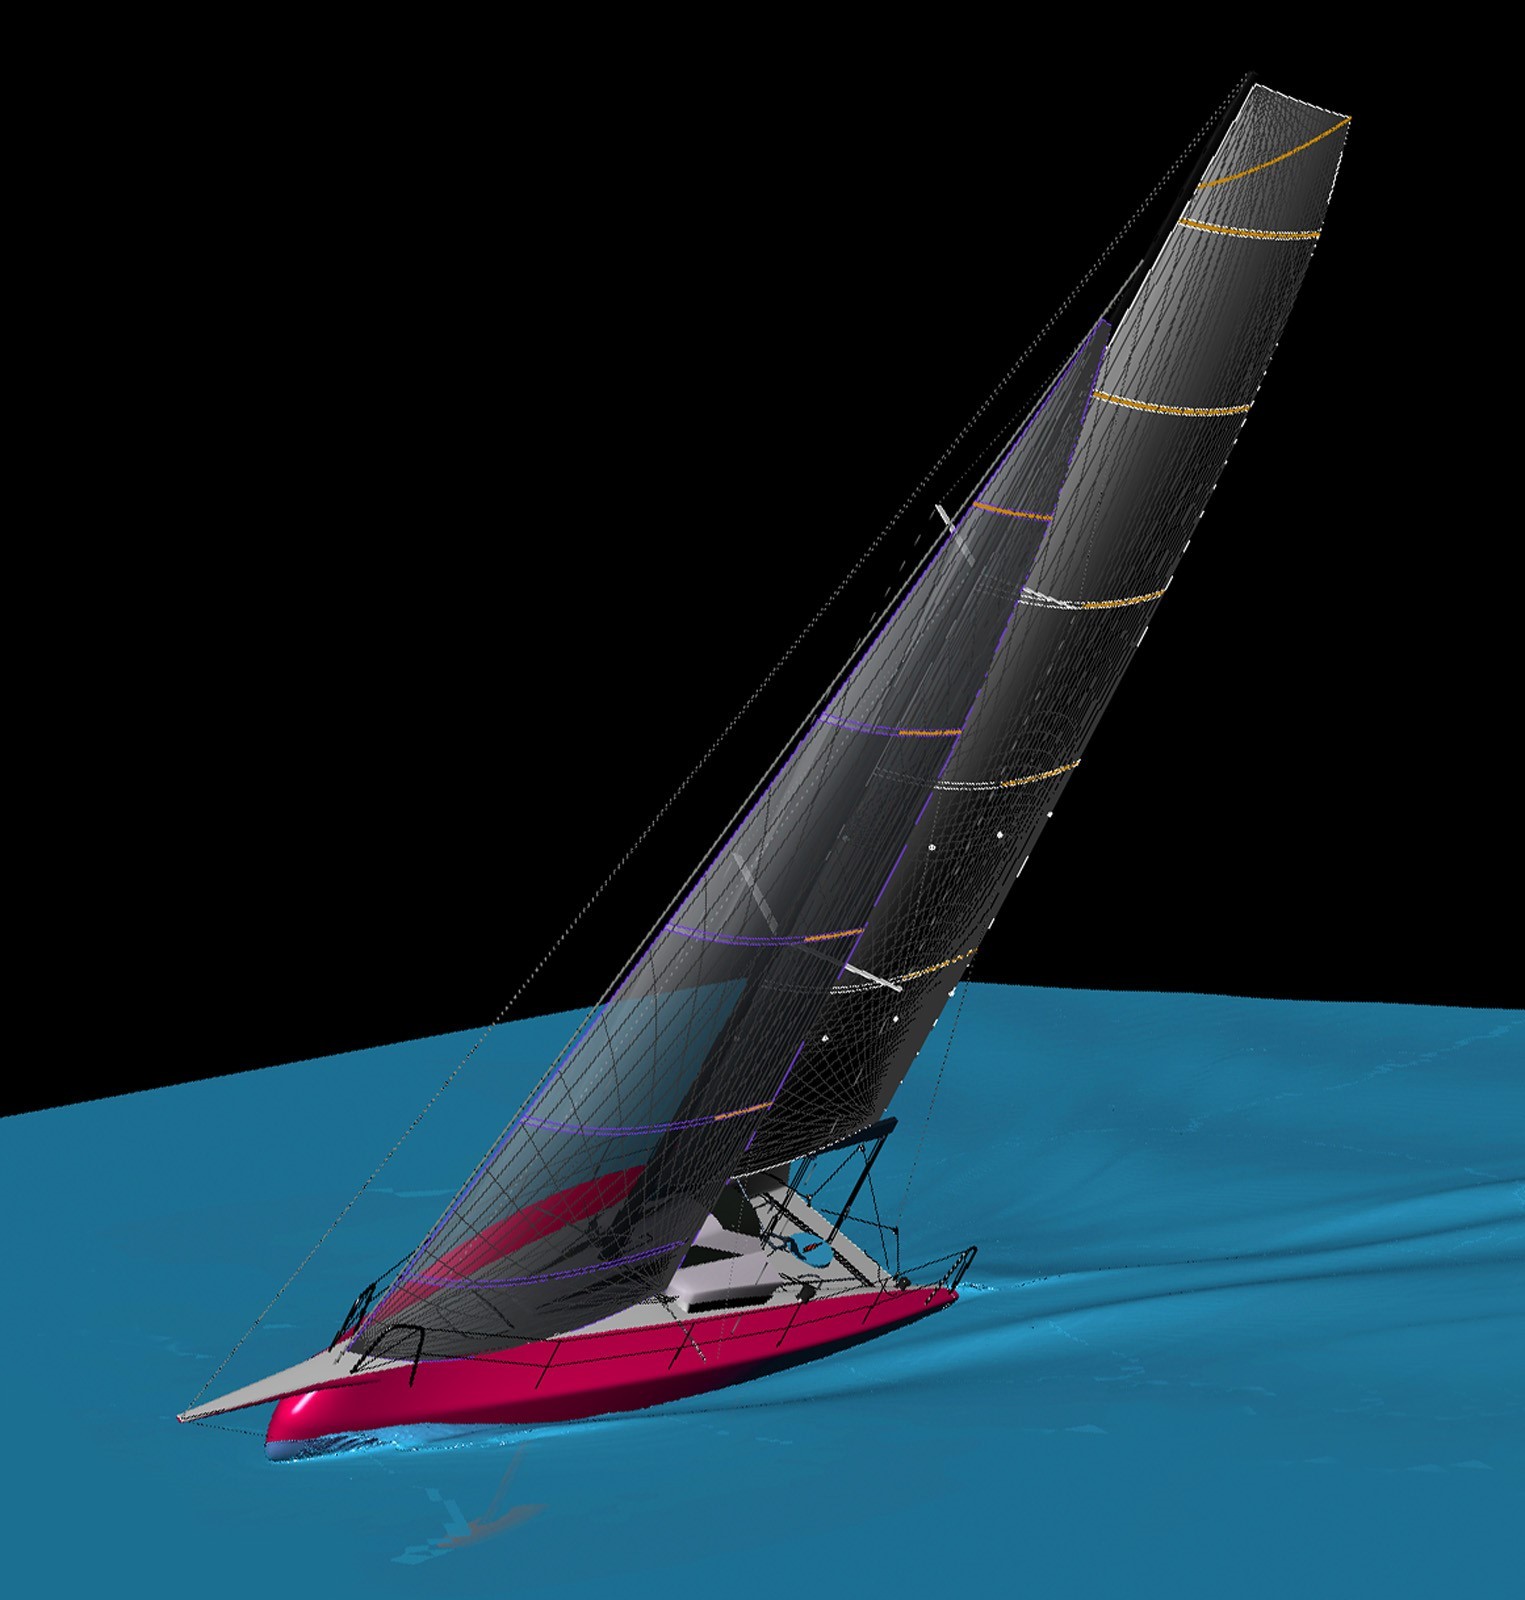 rocket sailboat video